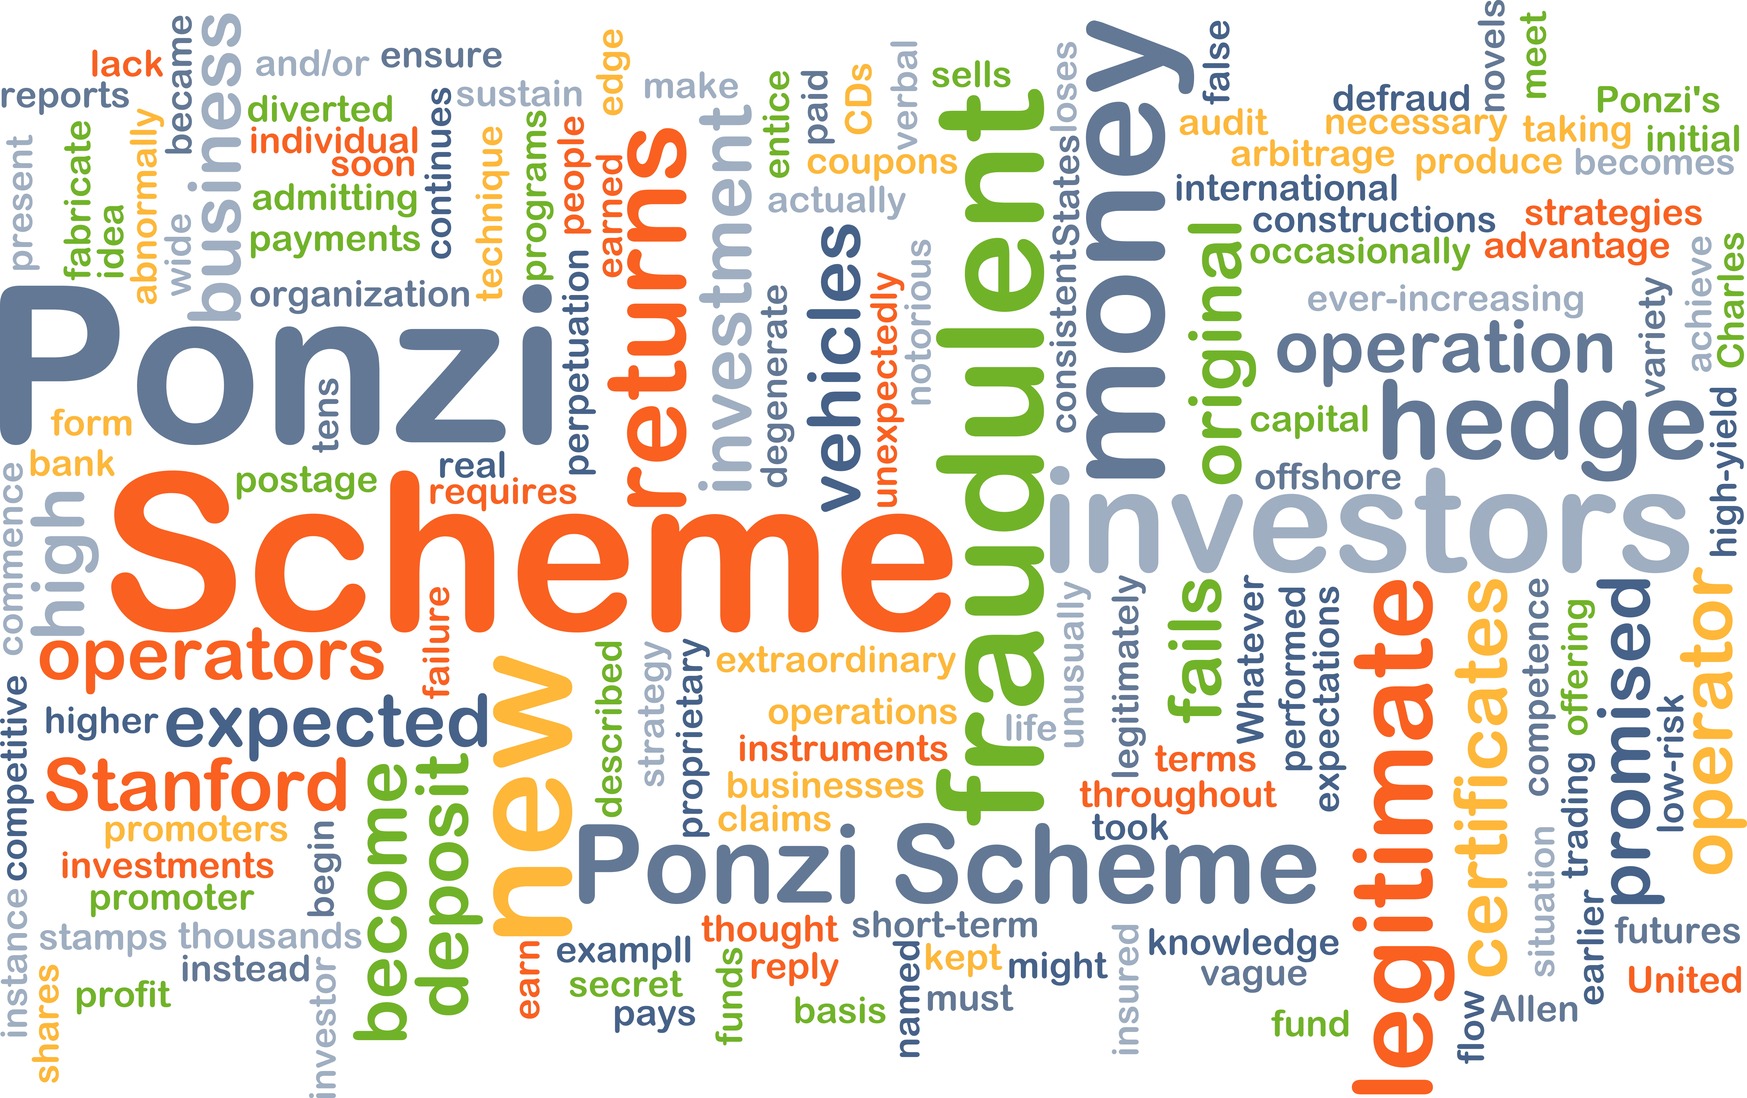 securities fraud and ponzi scheme whistleblower lawyers - zuckerman law